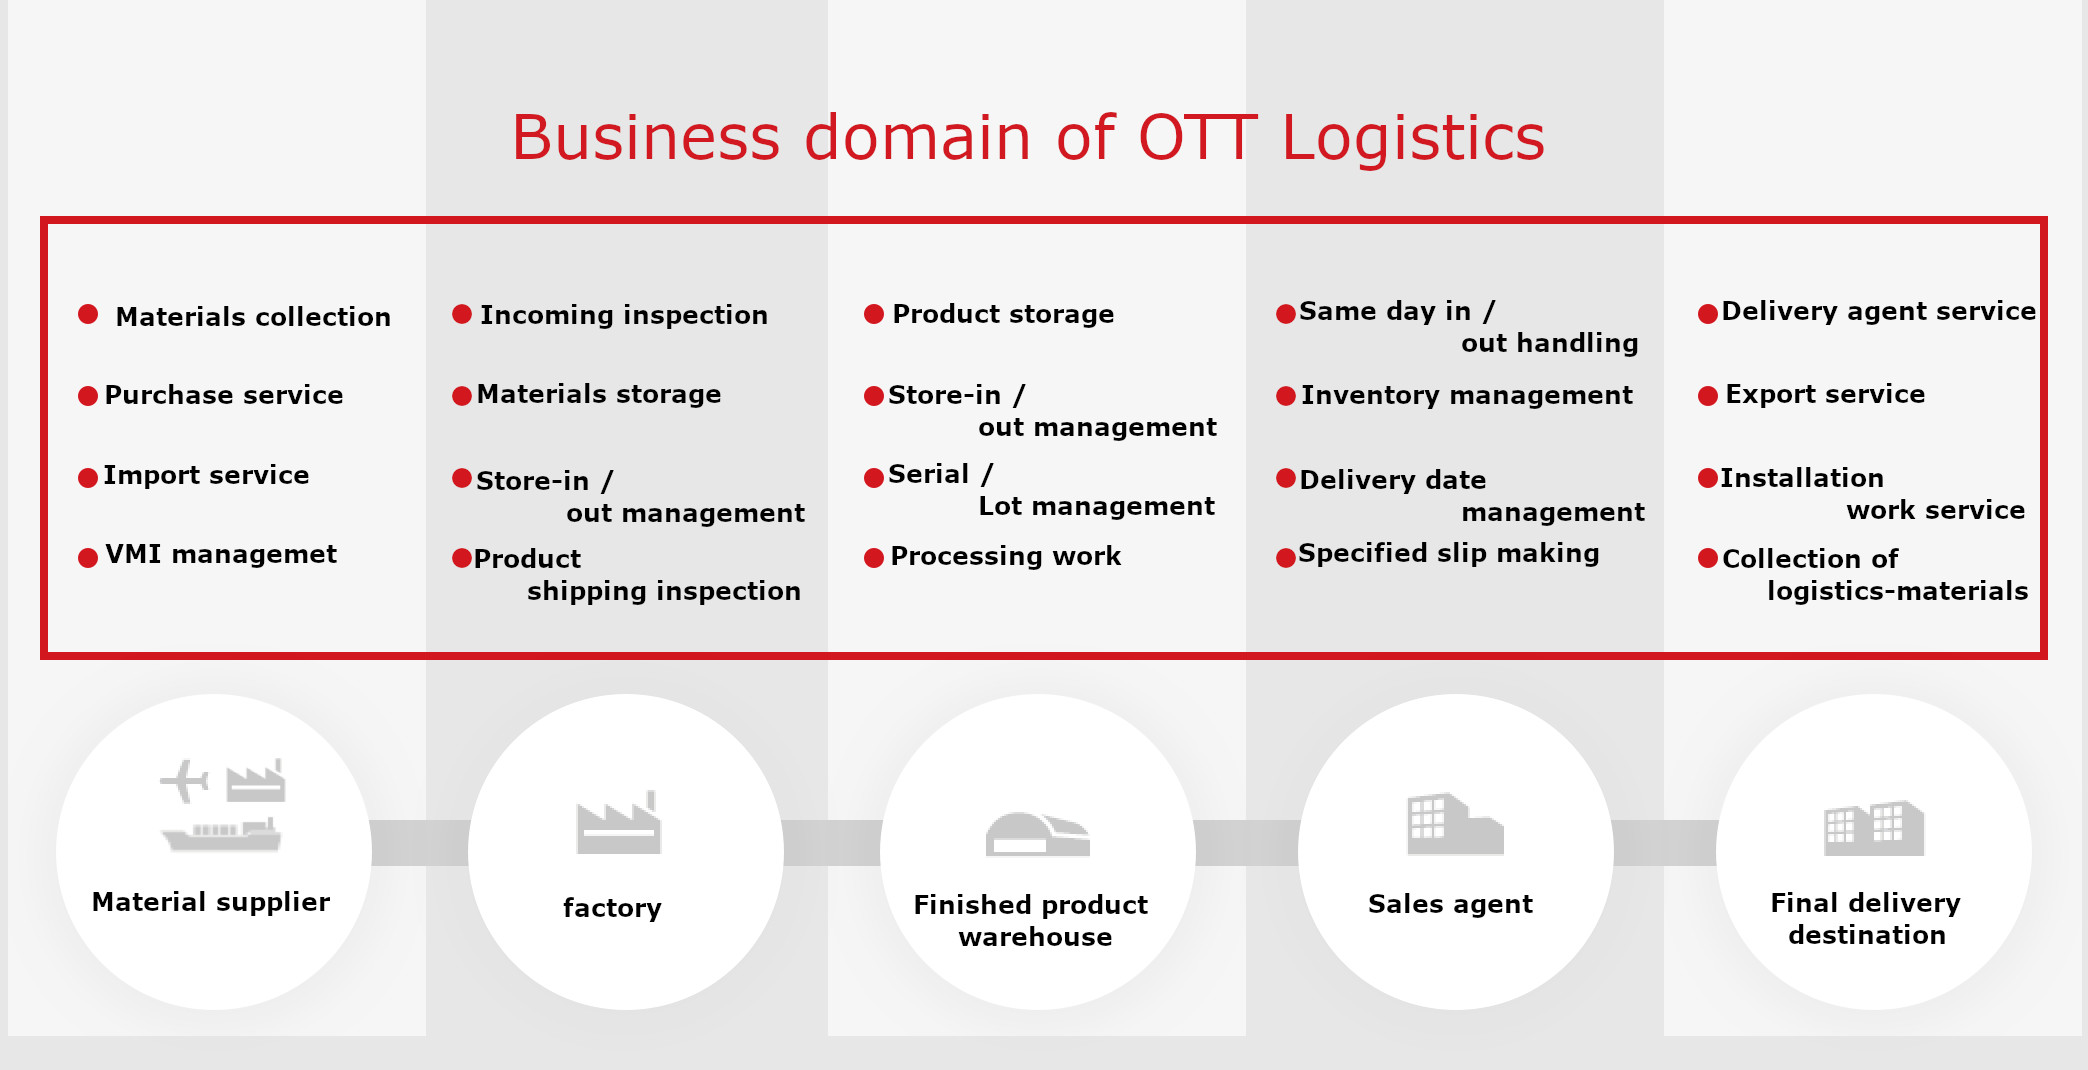 Business domain of OTT Logistics